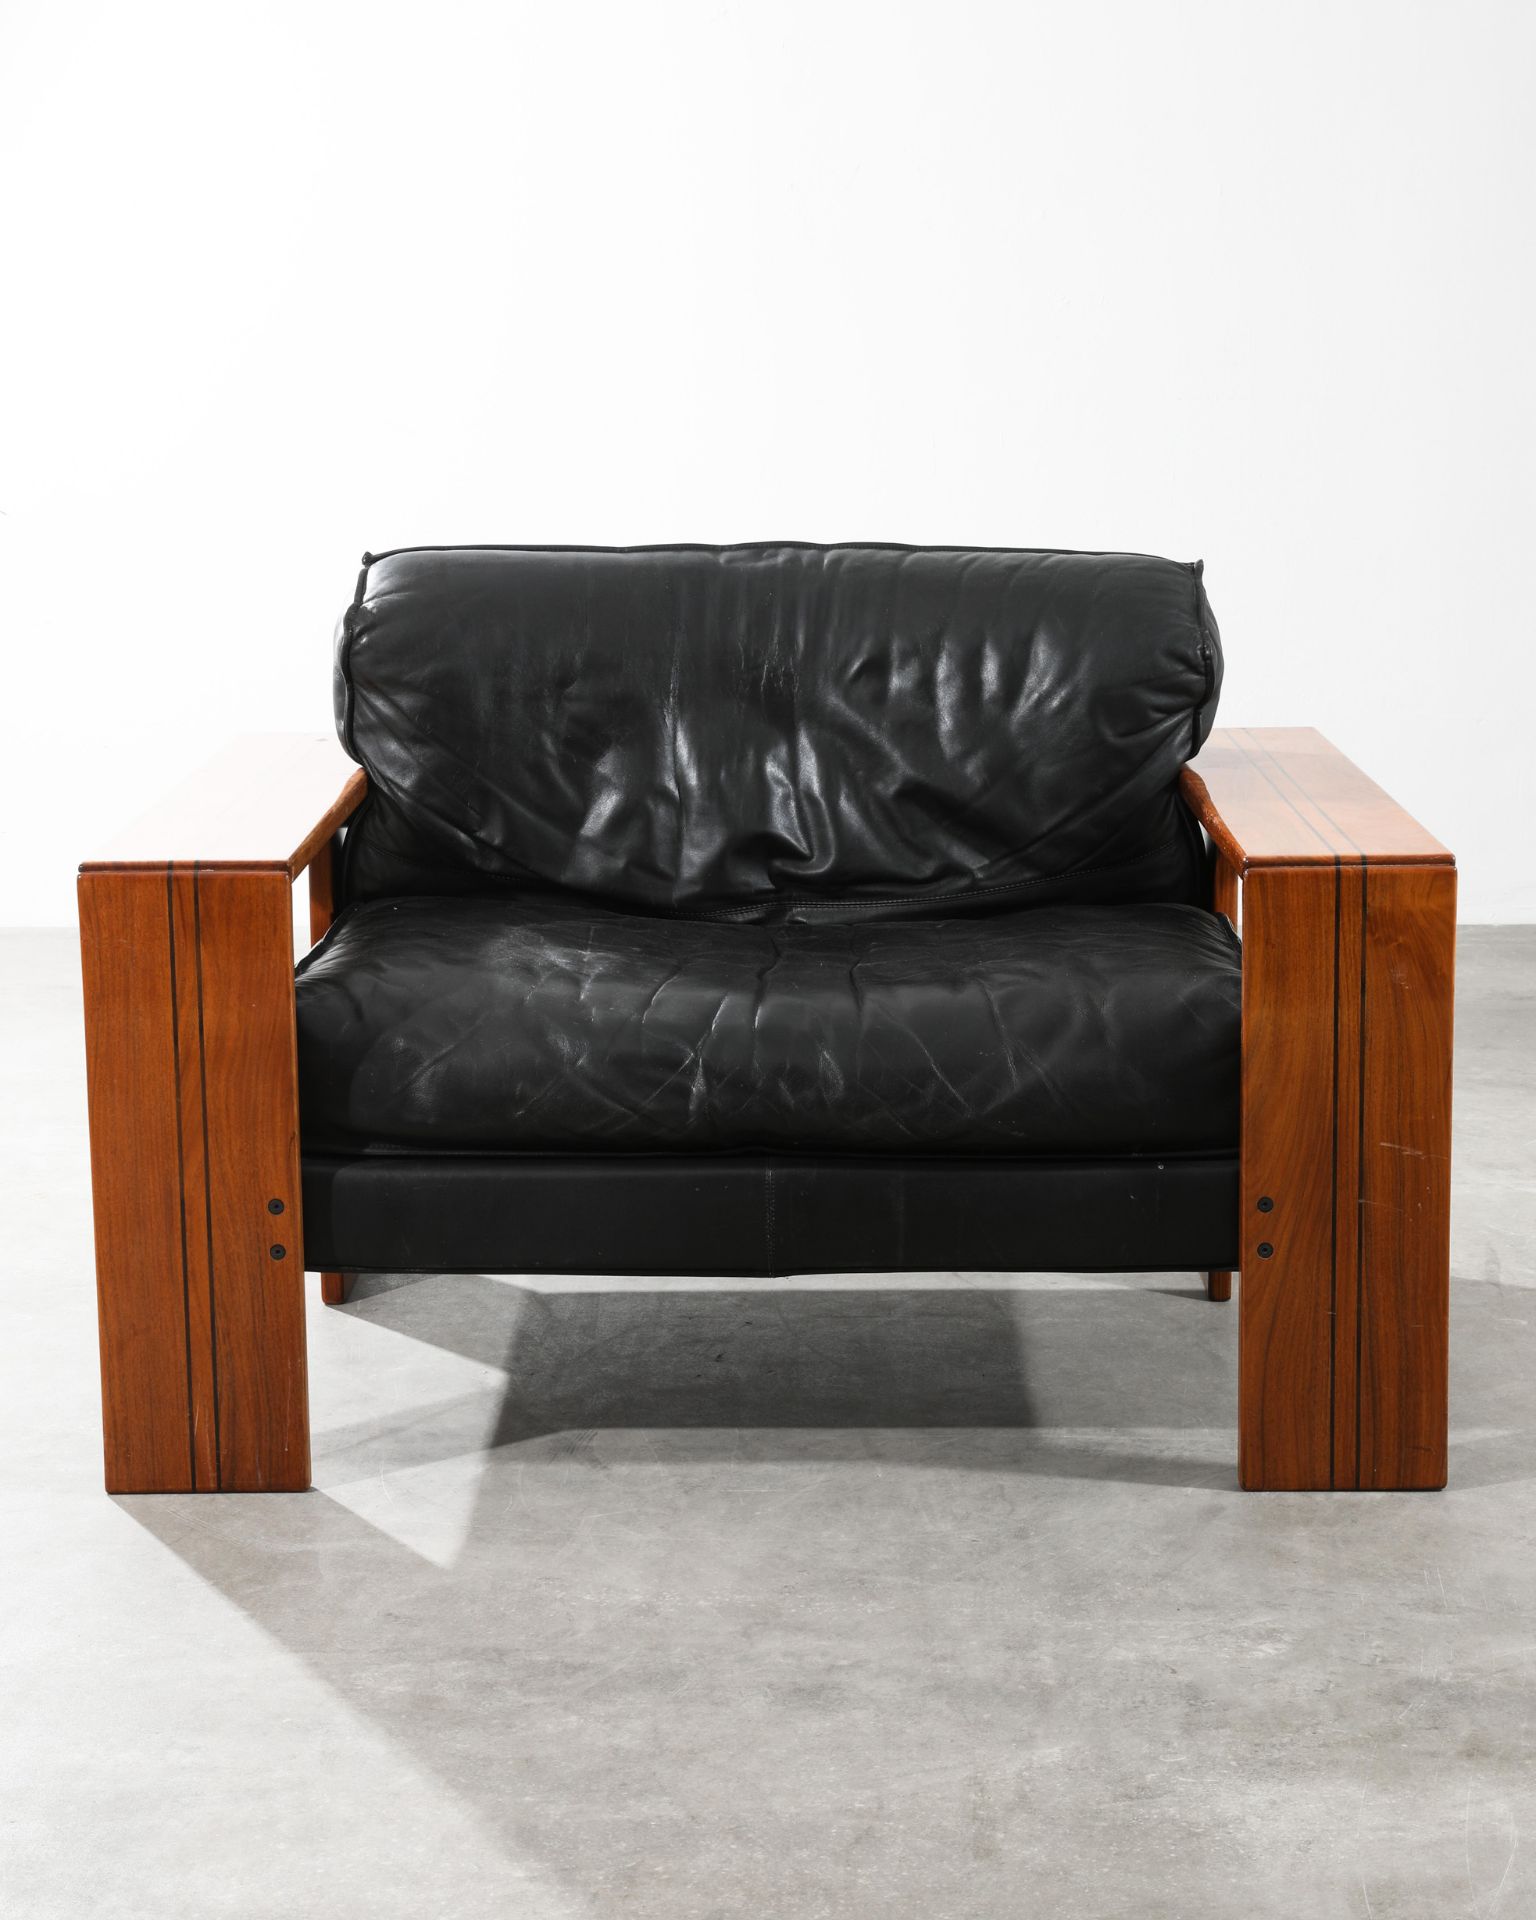 Afra & Tobia Scarpa, Maxalto, Lounge Chair Model Artona - Image 2 of 6